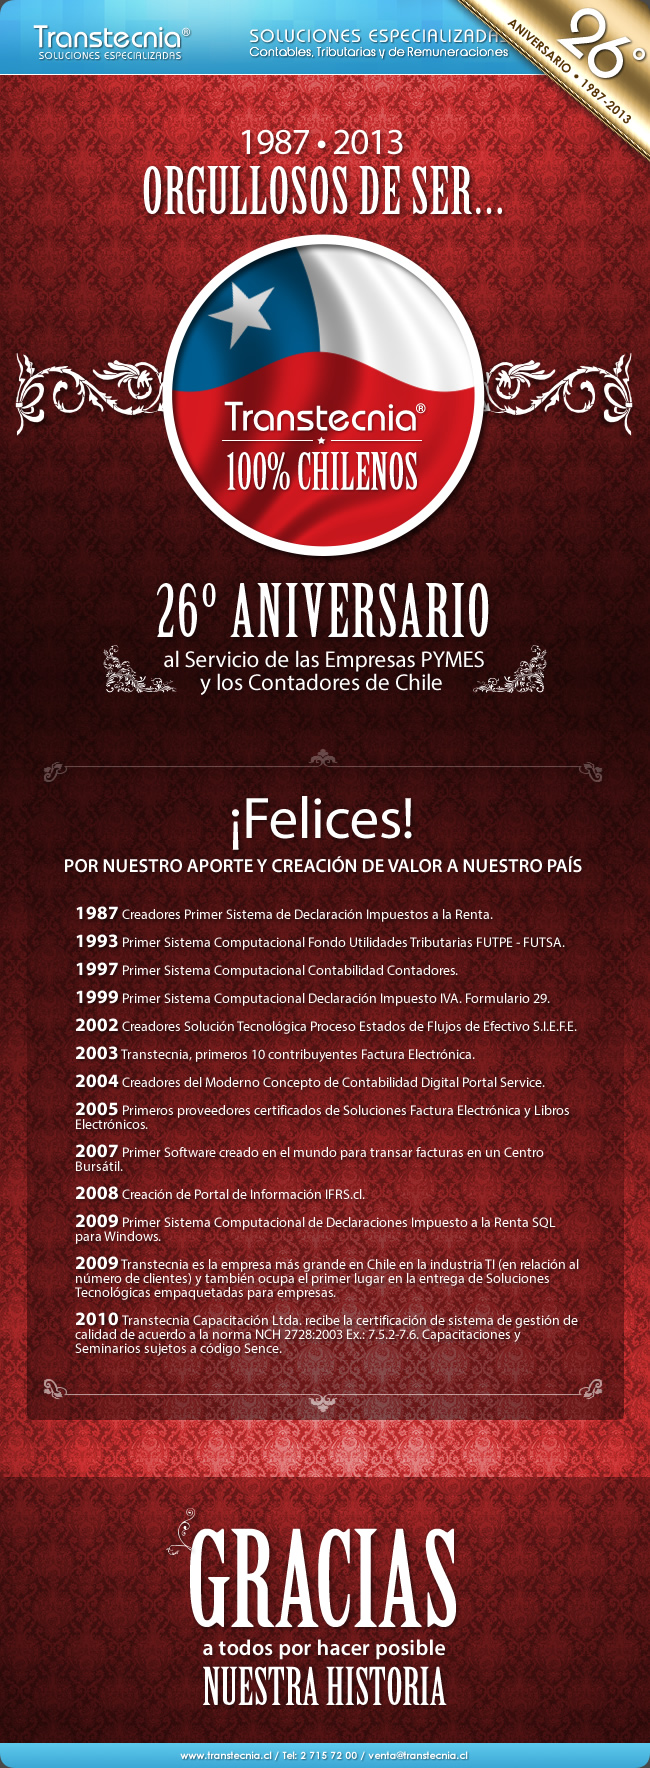 Transtecnia - Orgullosos de ser 100% chilenos. 26º Aniversario 1987-2013